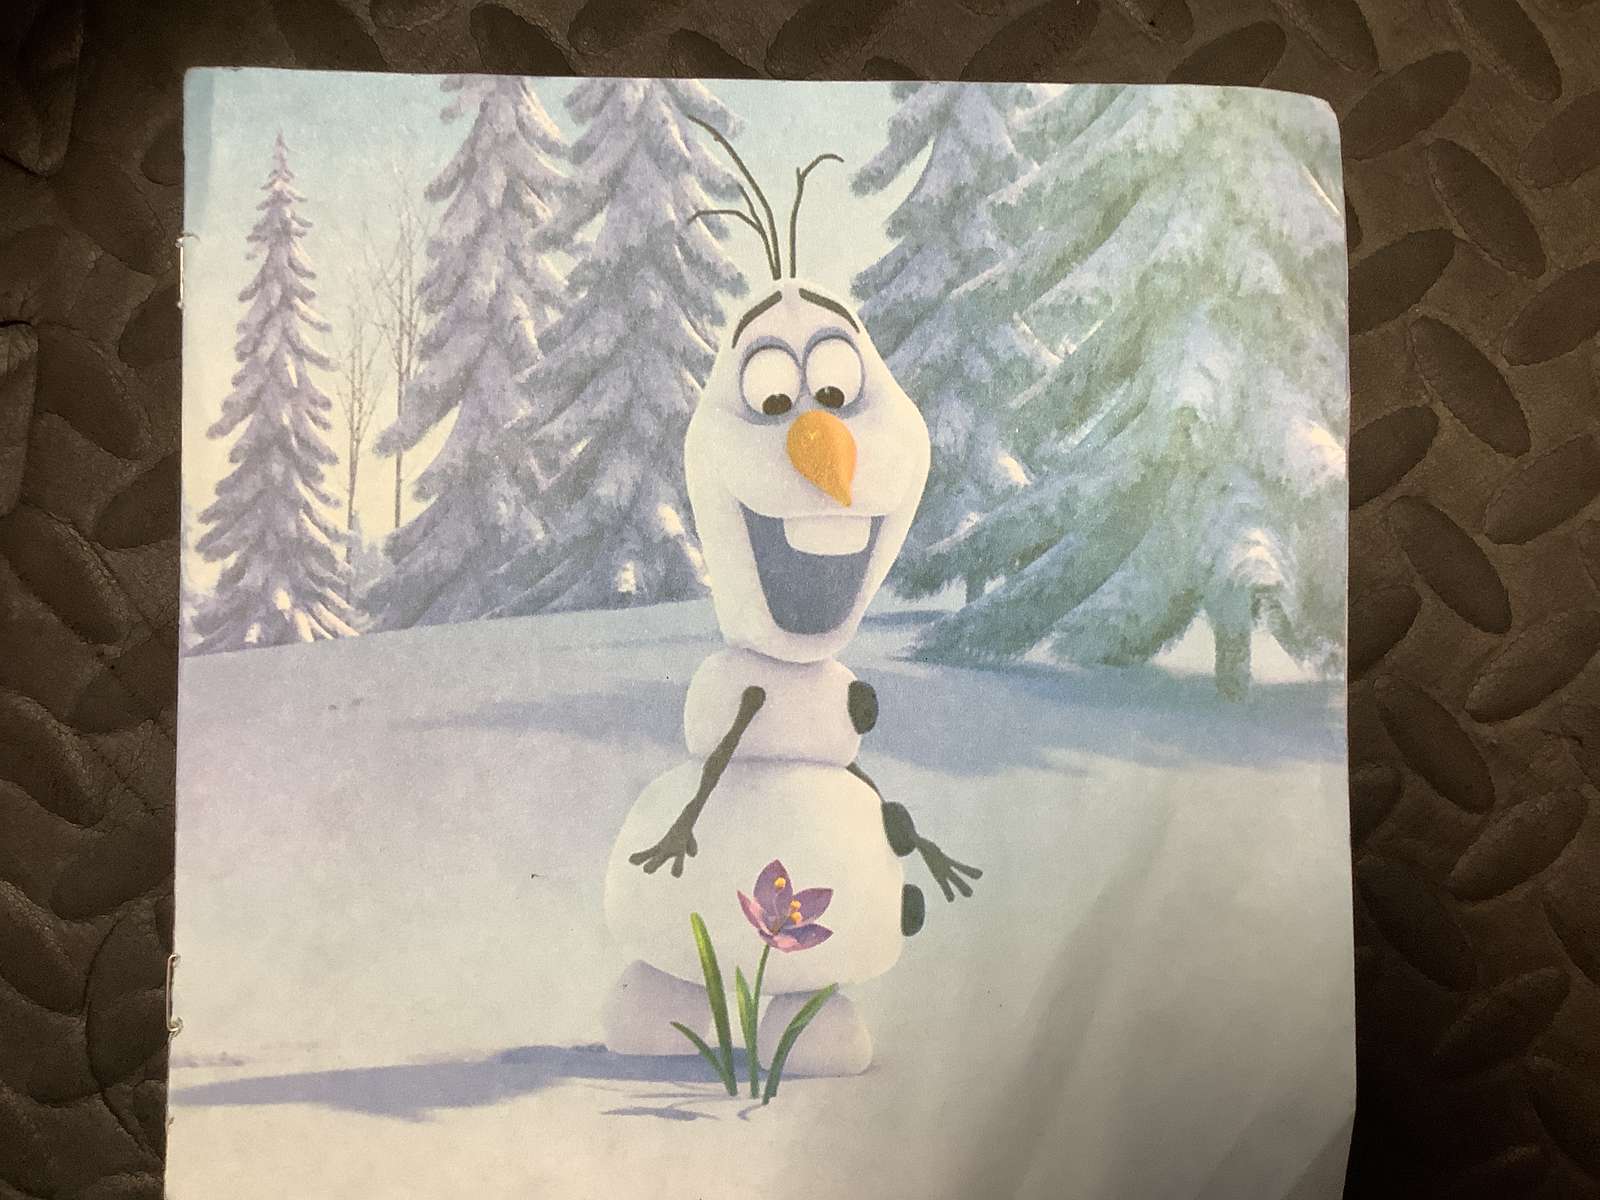 Olaf ve sněhu skládačky online